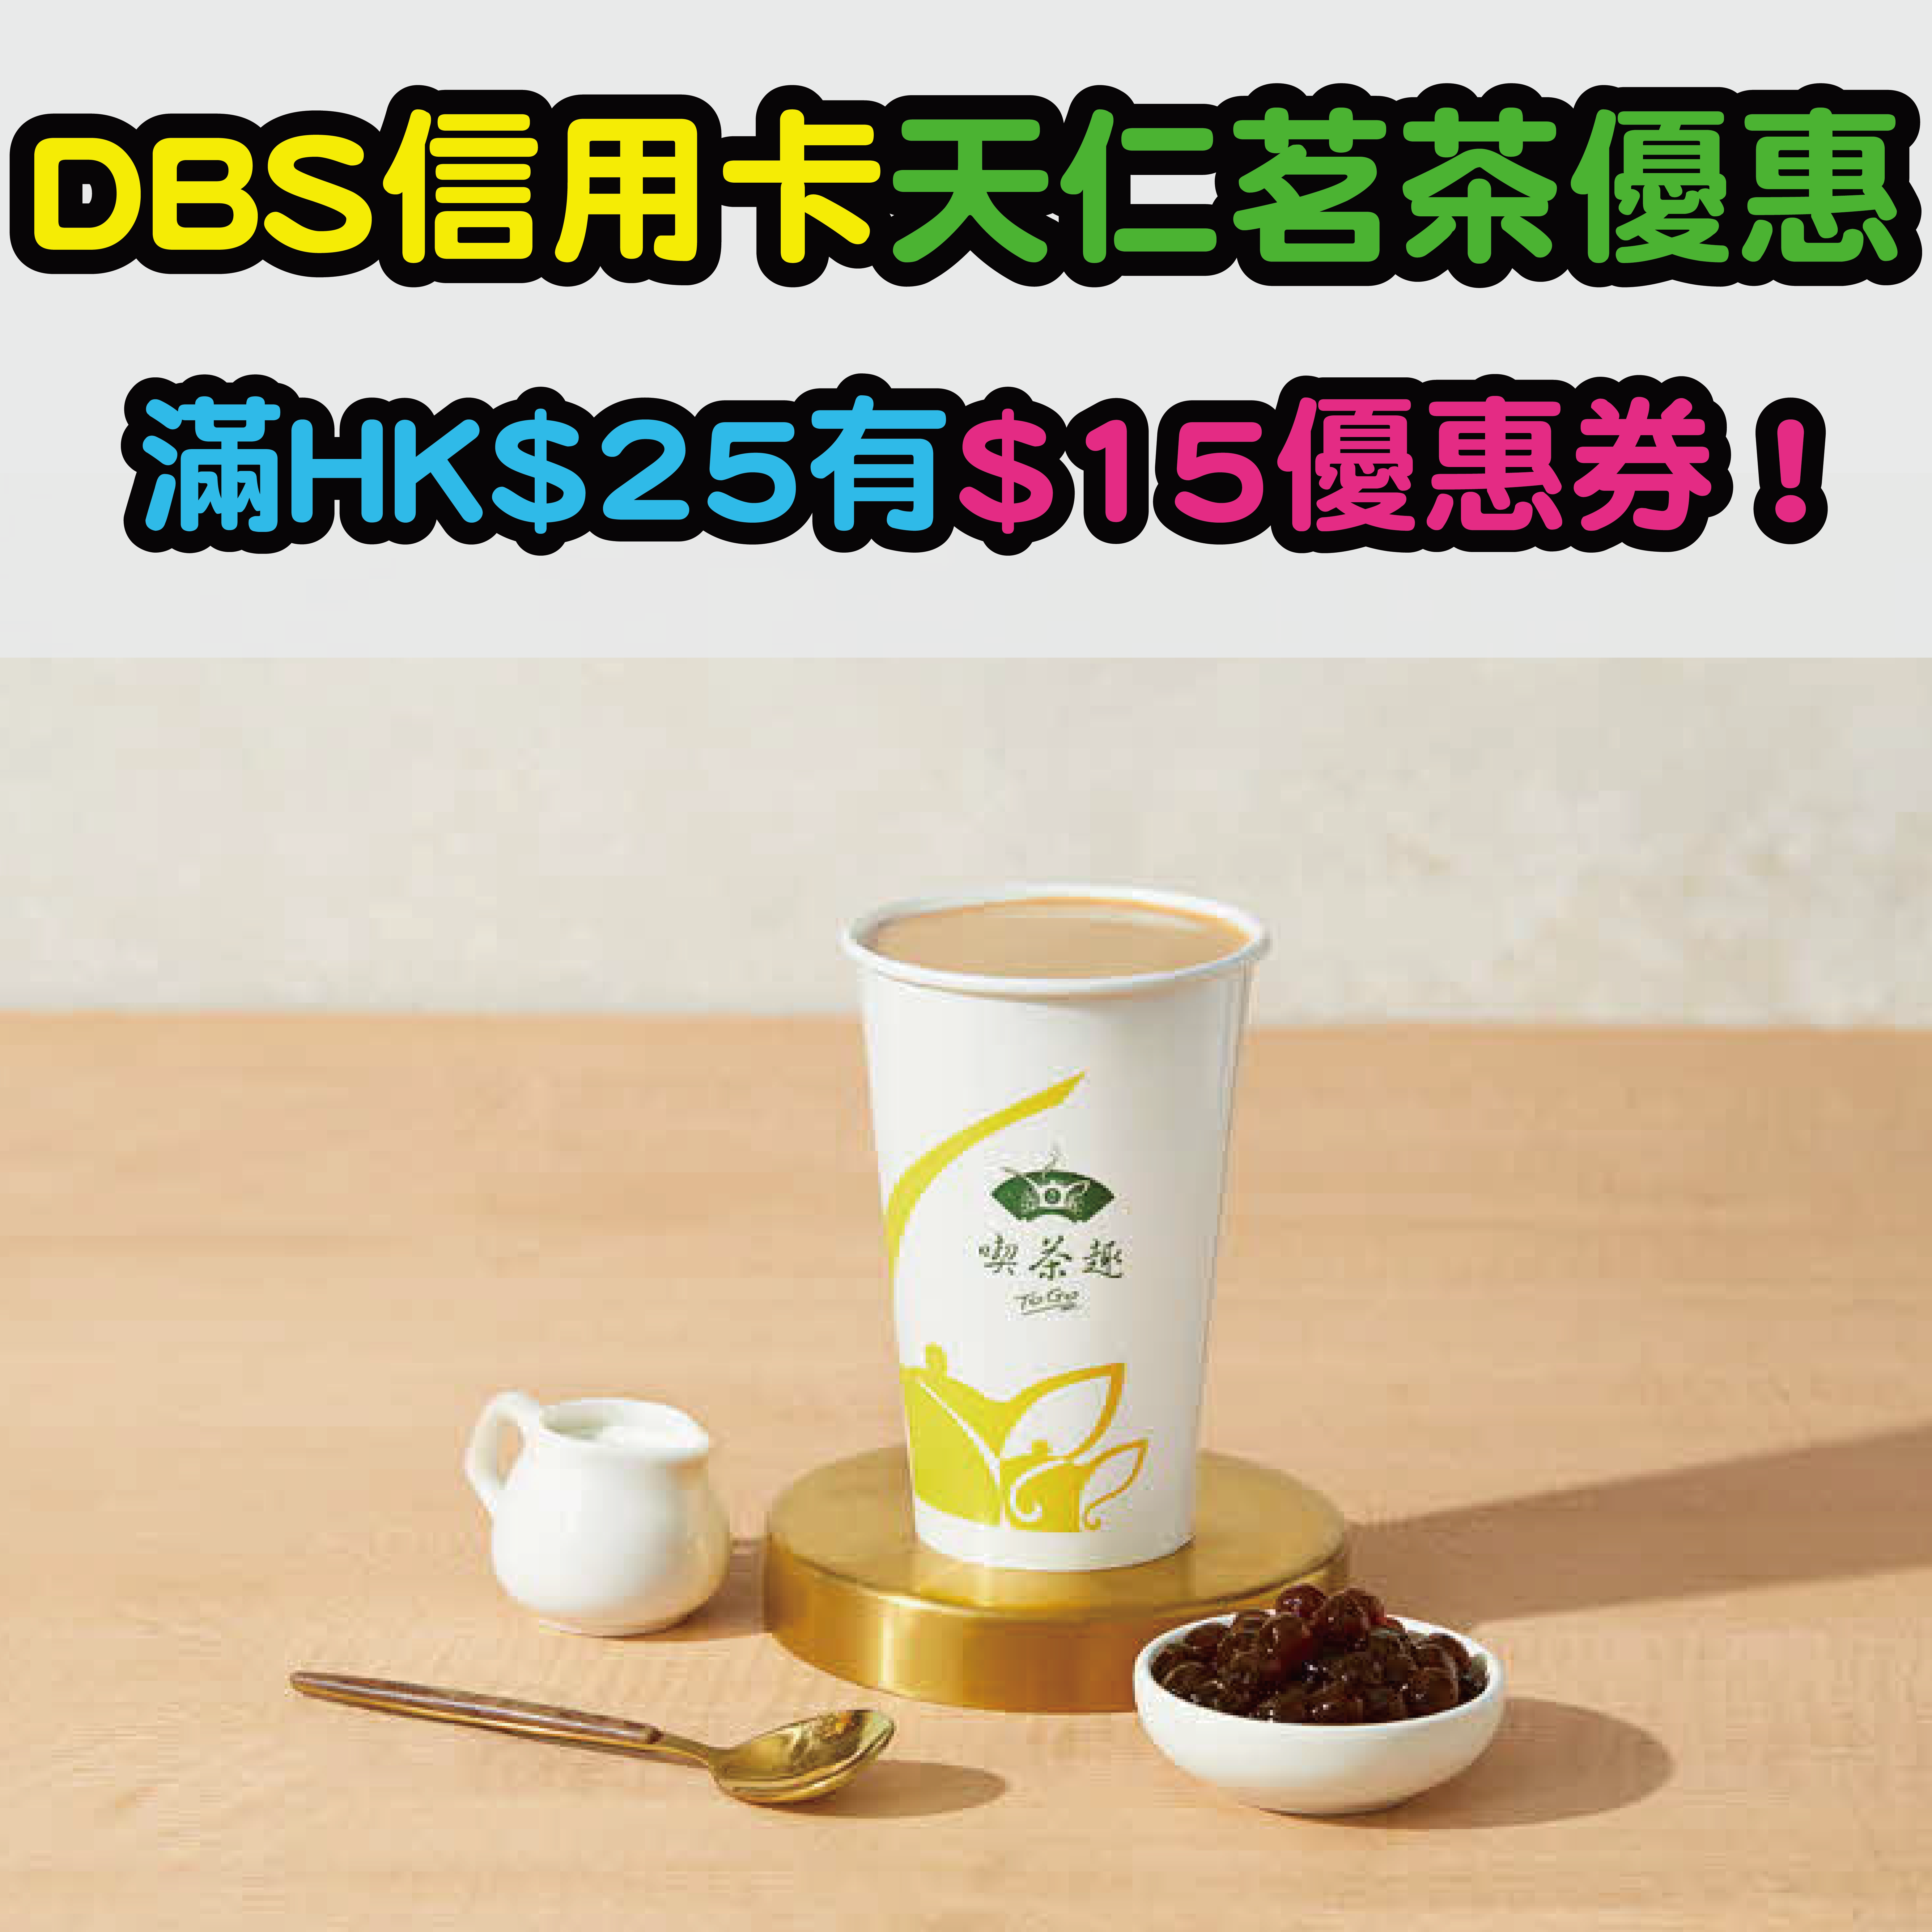 【DBS COMPASS VISA天仁茗茶優惠】滿HK$25有$15優惠券！